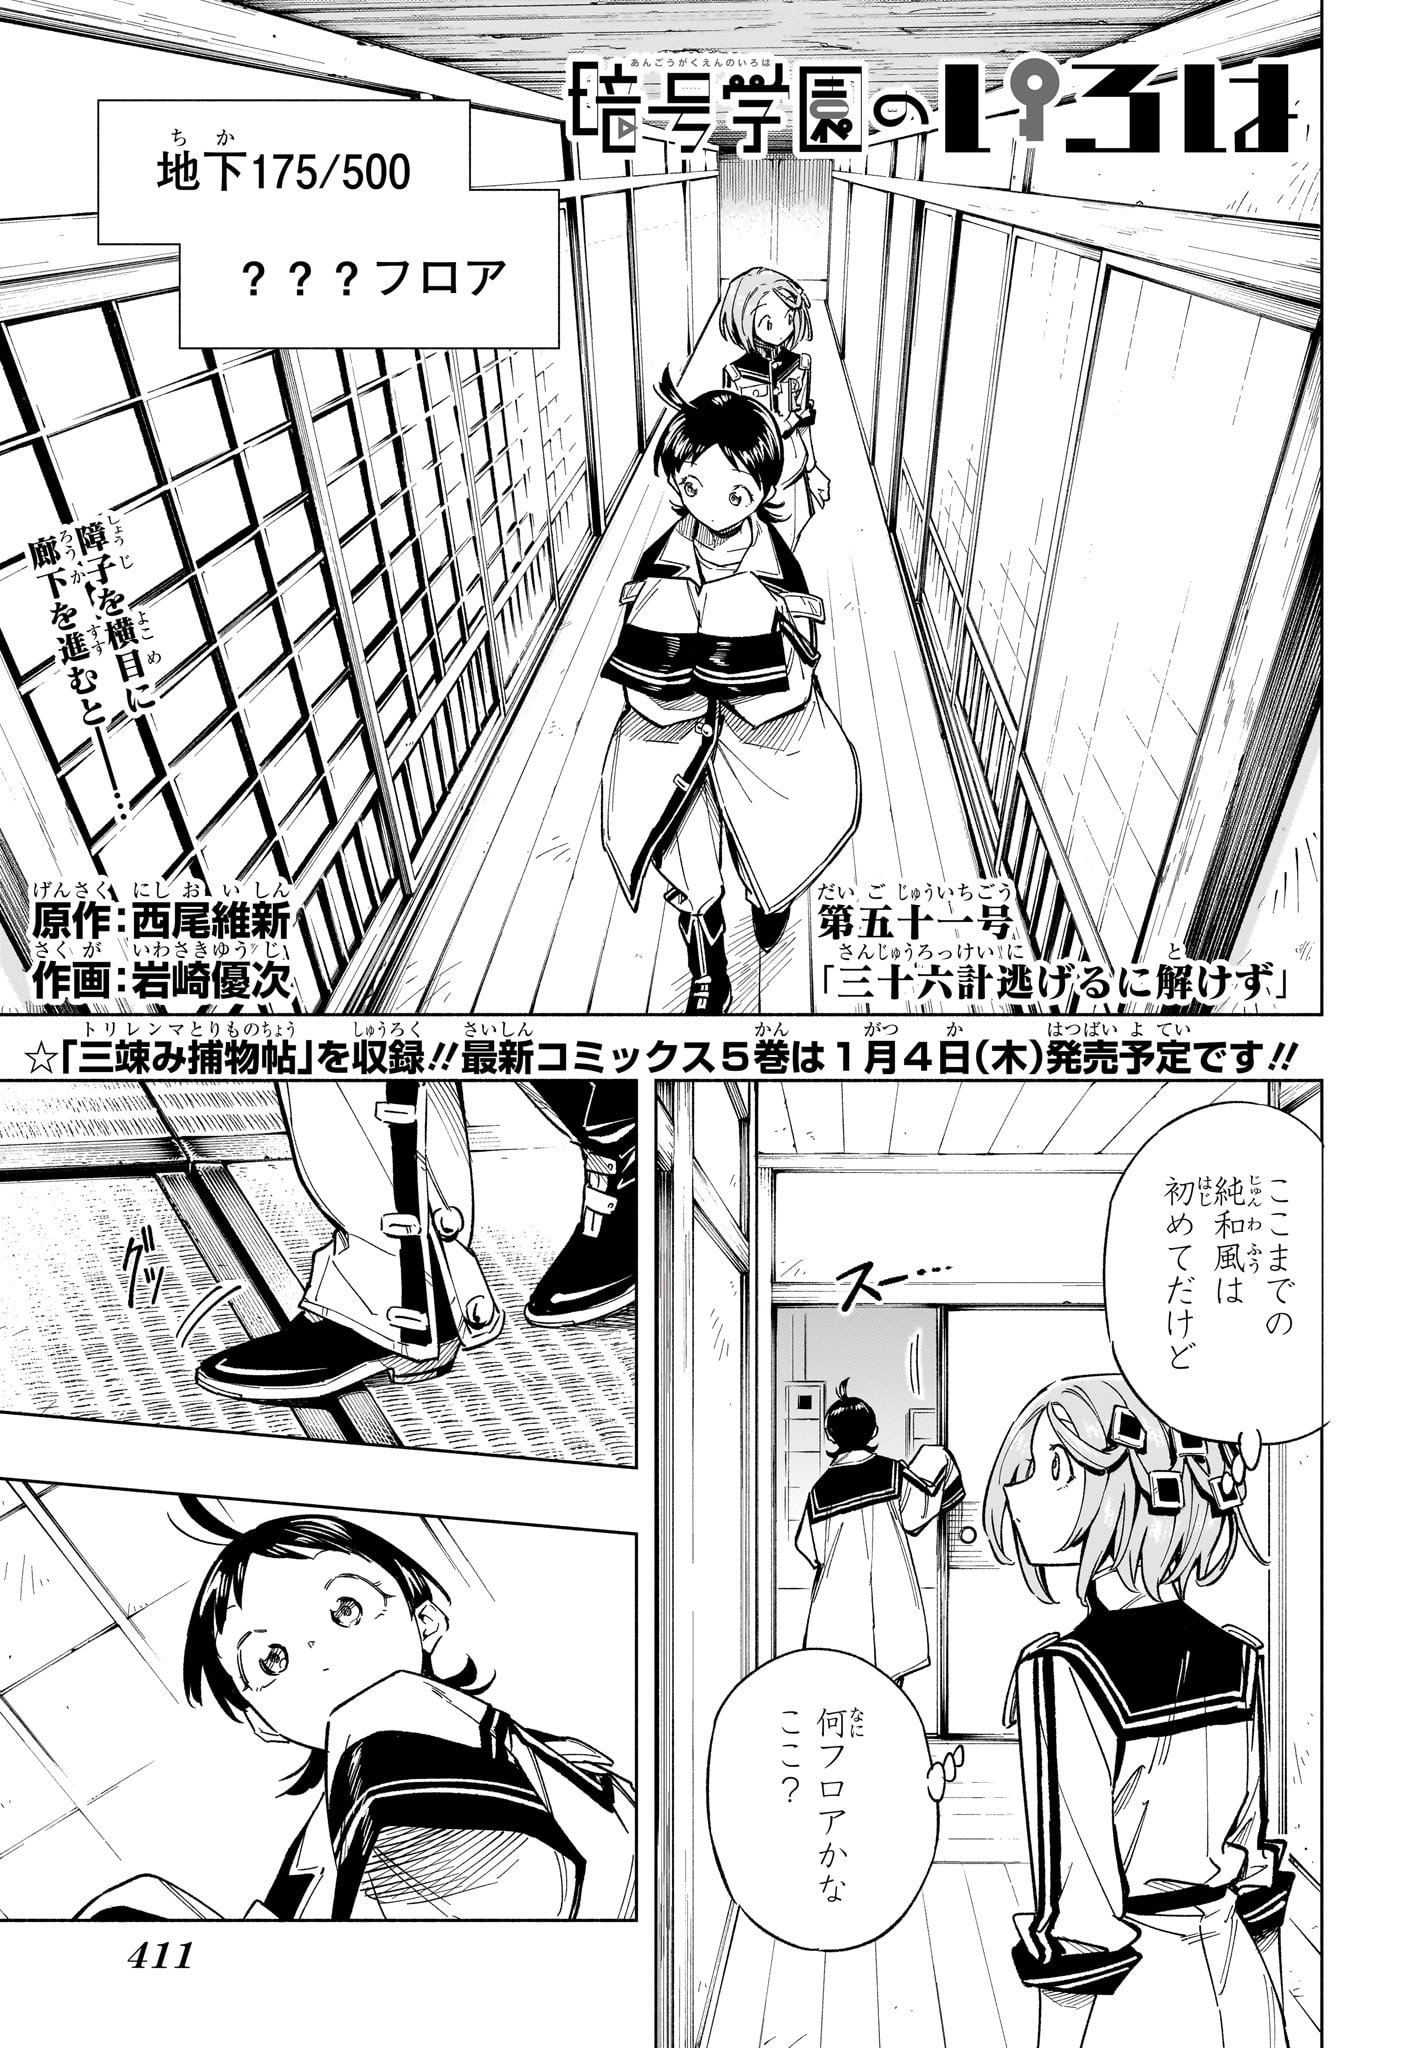 Angou Gakuen no Iroha - Chapter 51 - Page 1